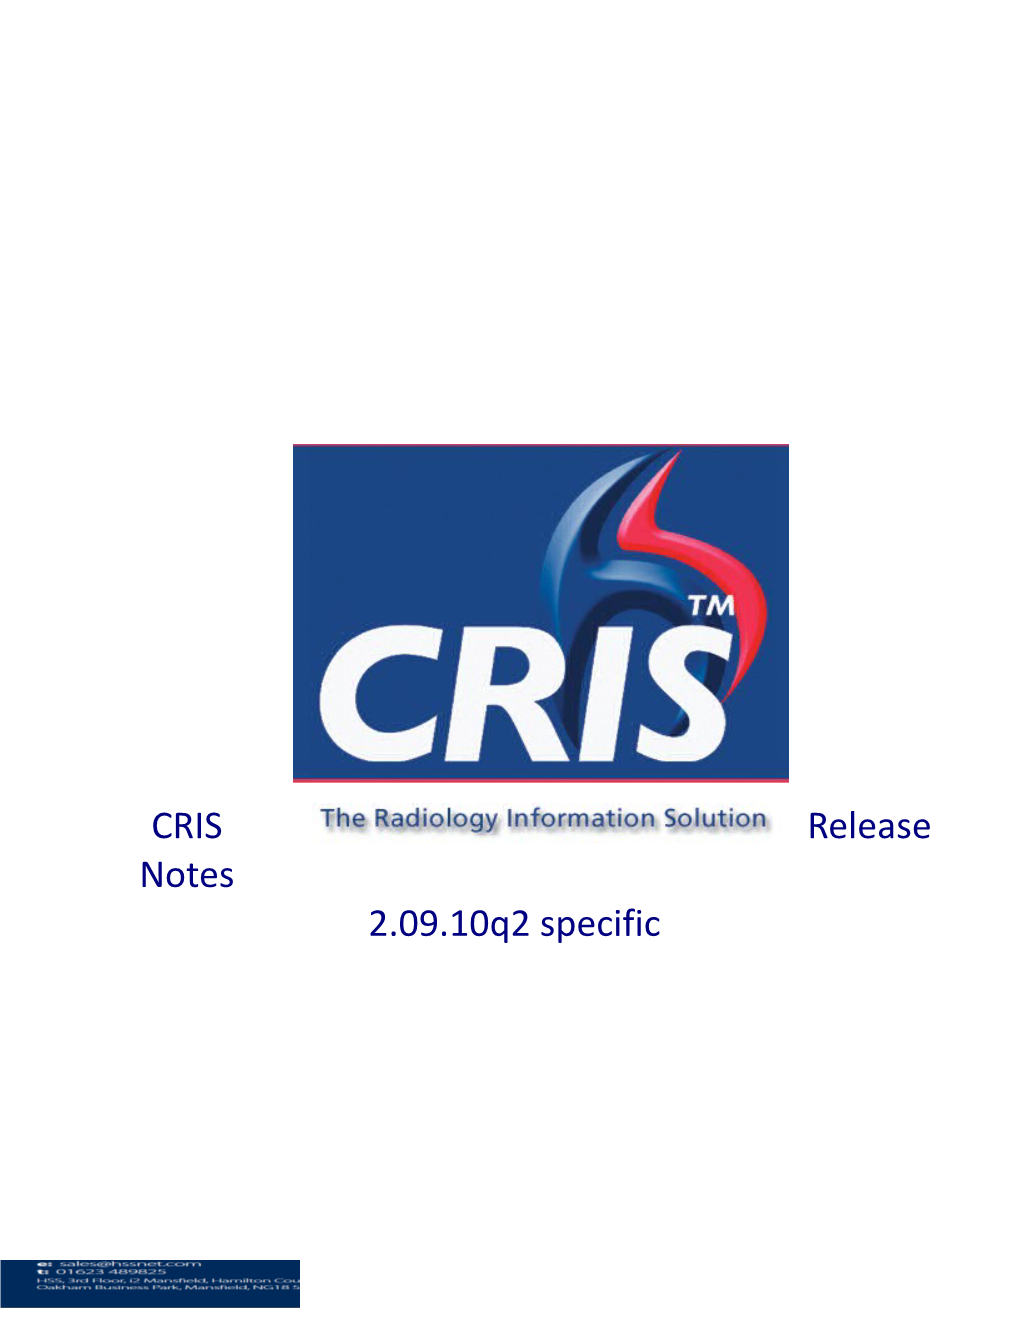 CRIS Release Notes 2.09.10Q2 Specific